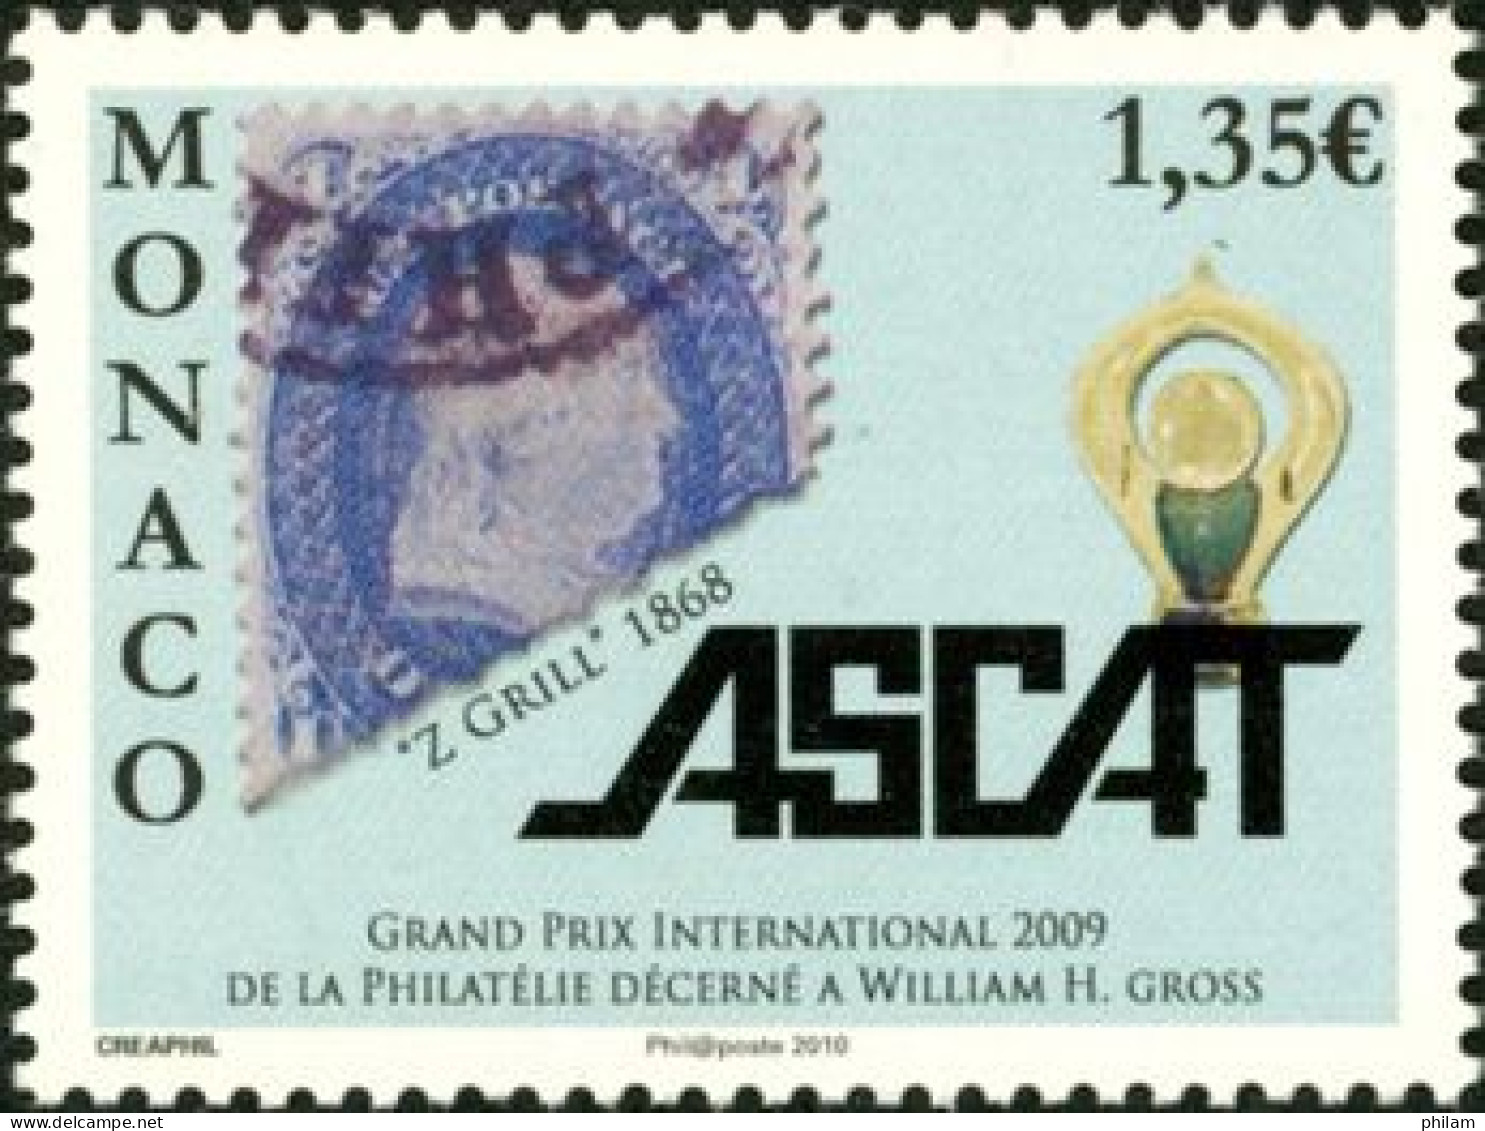 MONACO 2009 - Grand Prix De L'ASCAT - 1 V. - Unused Stamps